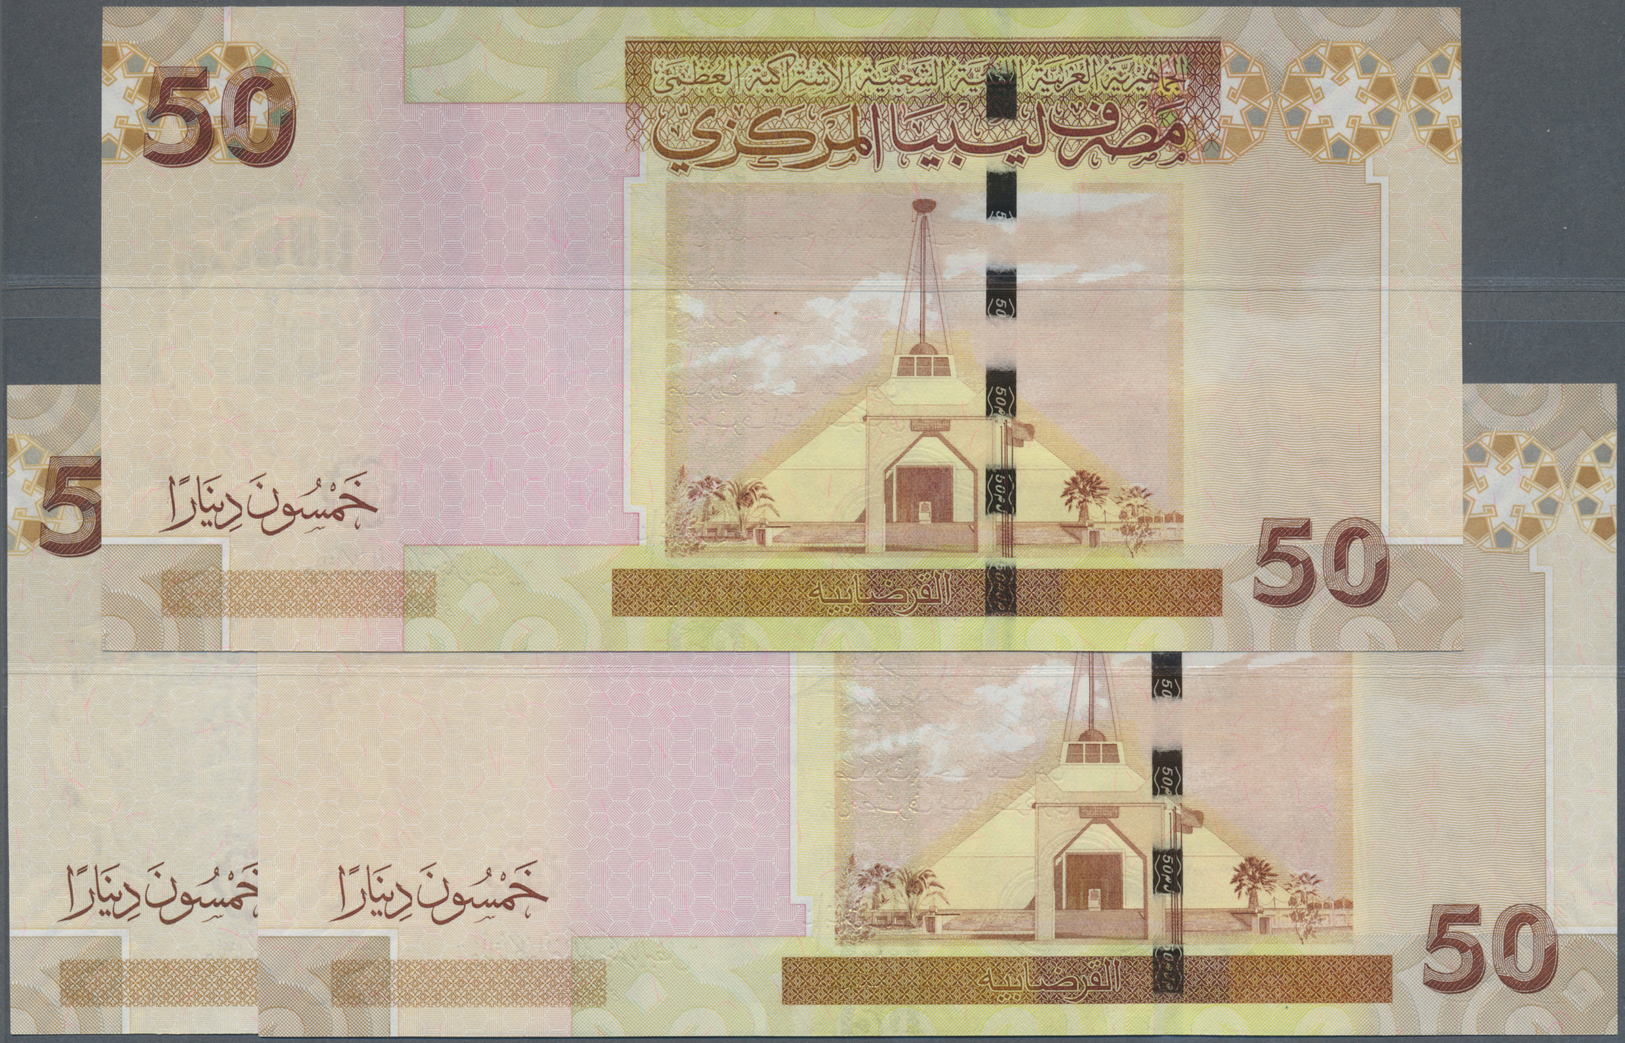 01584 Libya / Libyen: Set Of 3 Notes 50 Dinars ND(2009-20109) P. 75 In Condition: UNC. (3 Pcs) - Libya